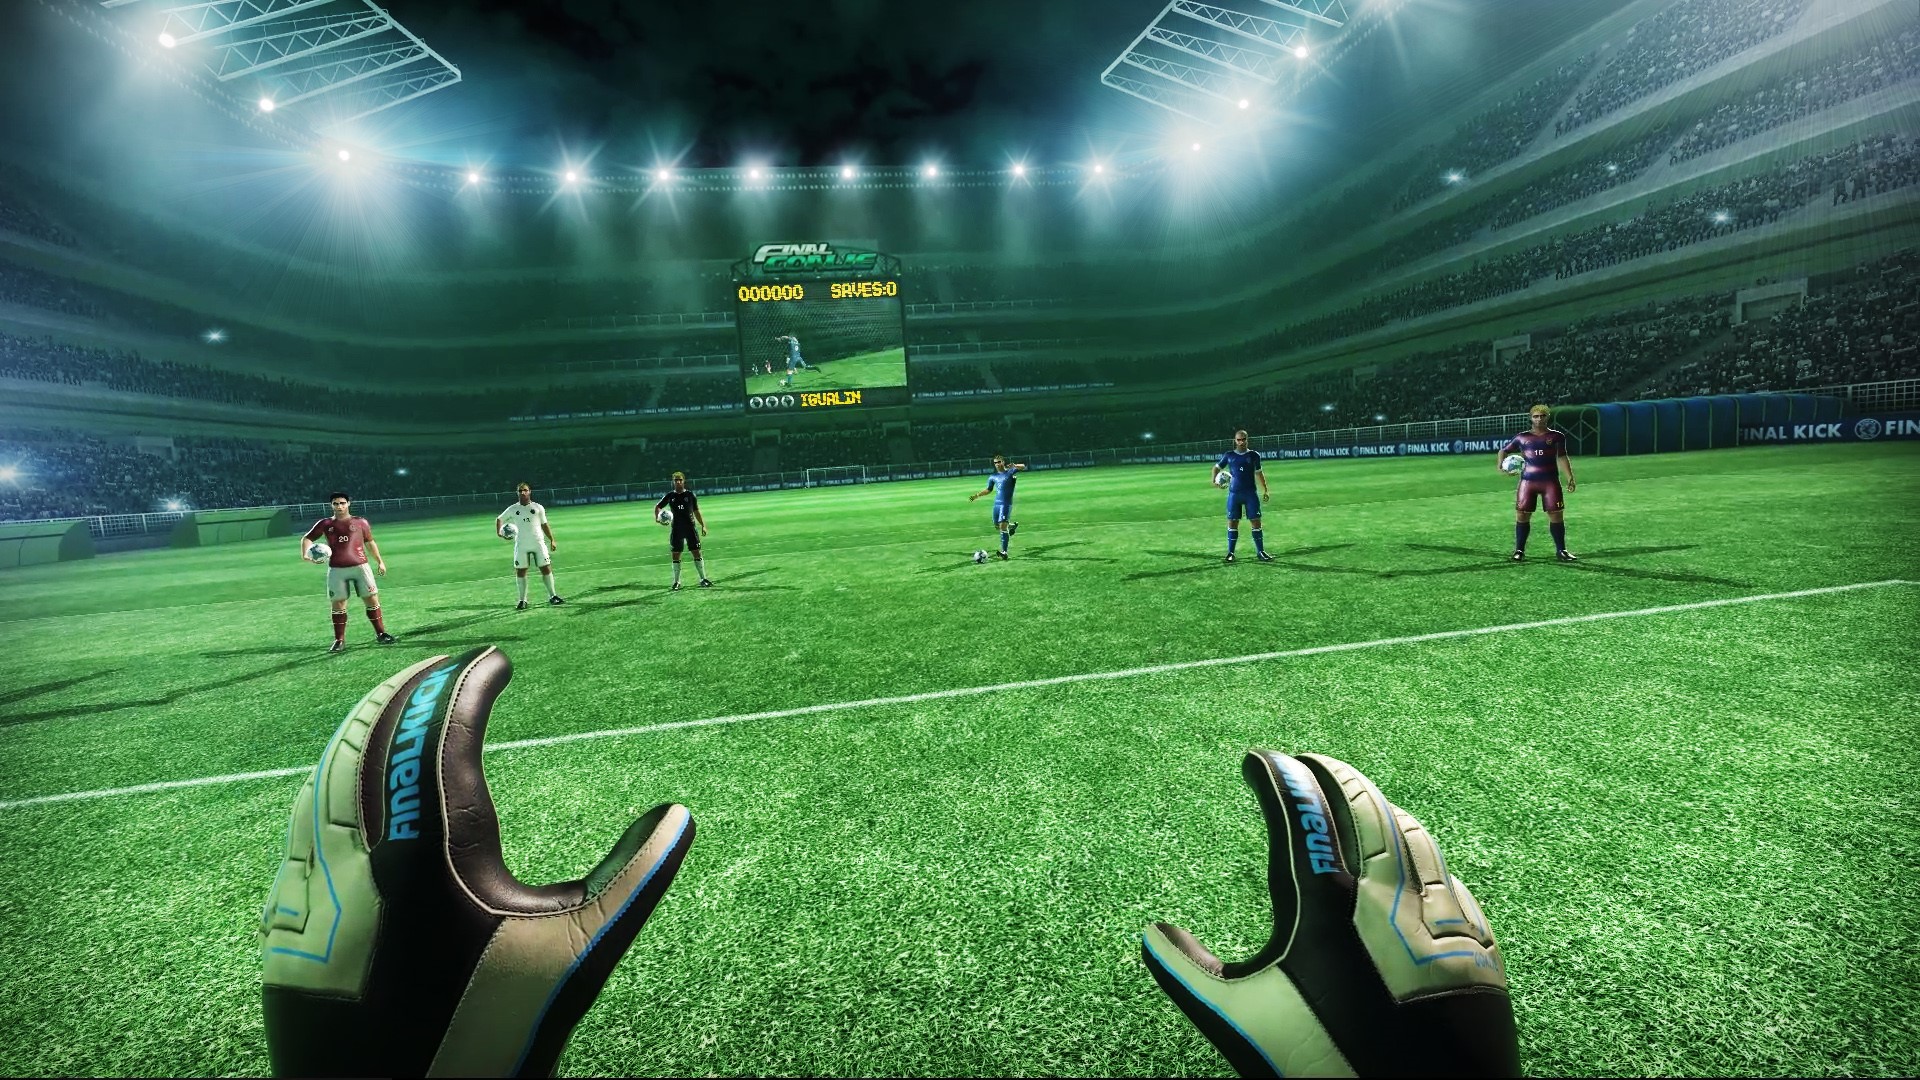 Football final. Виртуальный футбол. Футбольная игра. VR футбол. Футбольный симулятор.